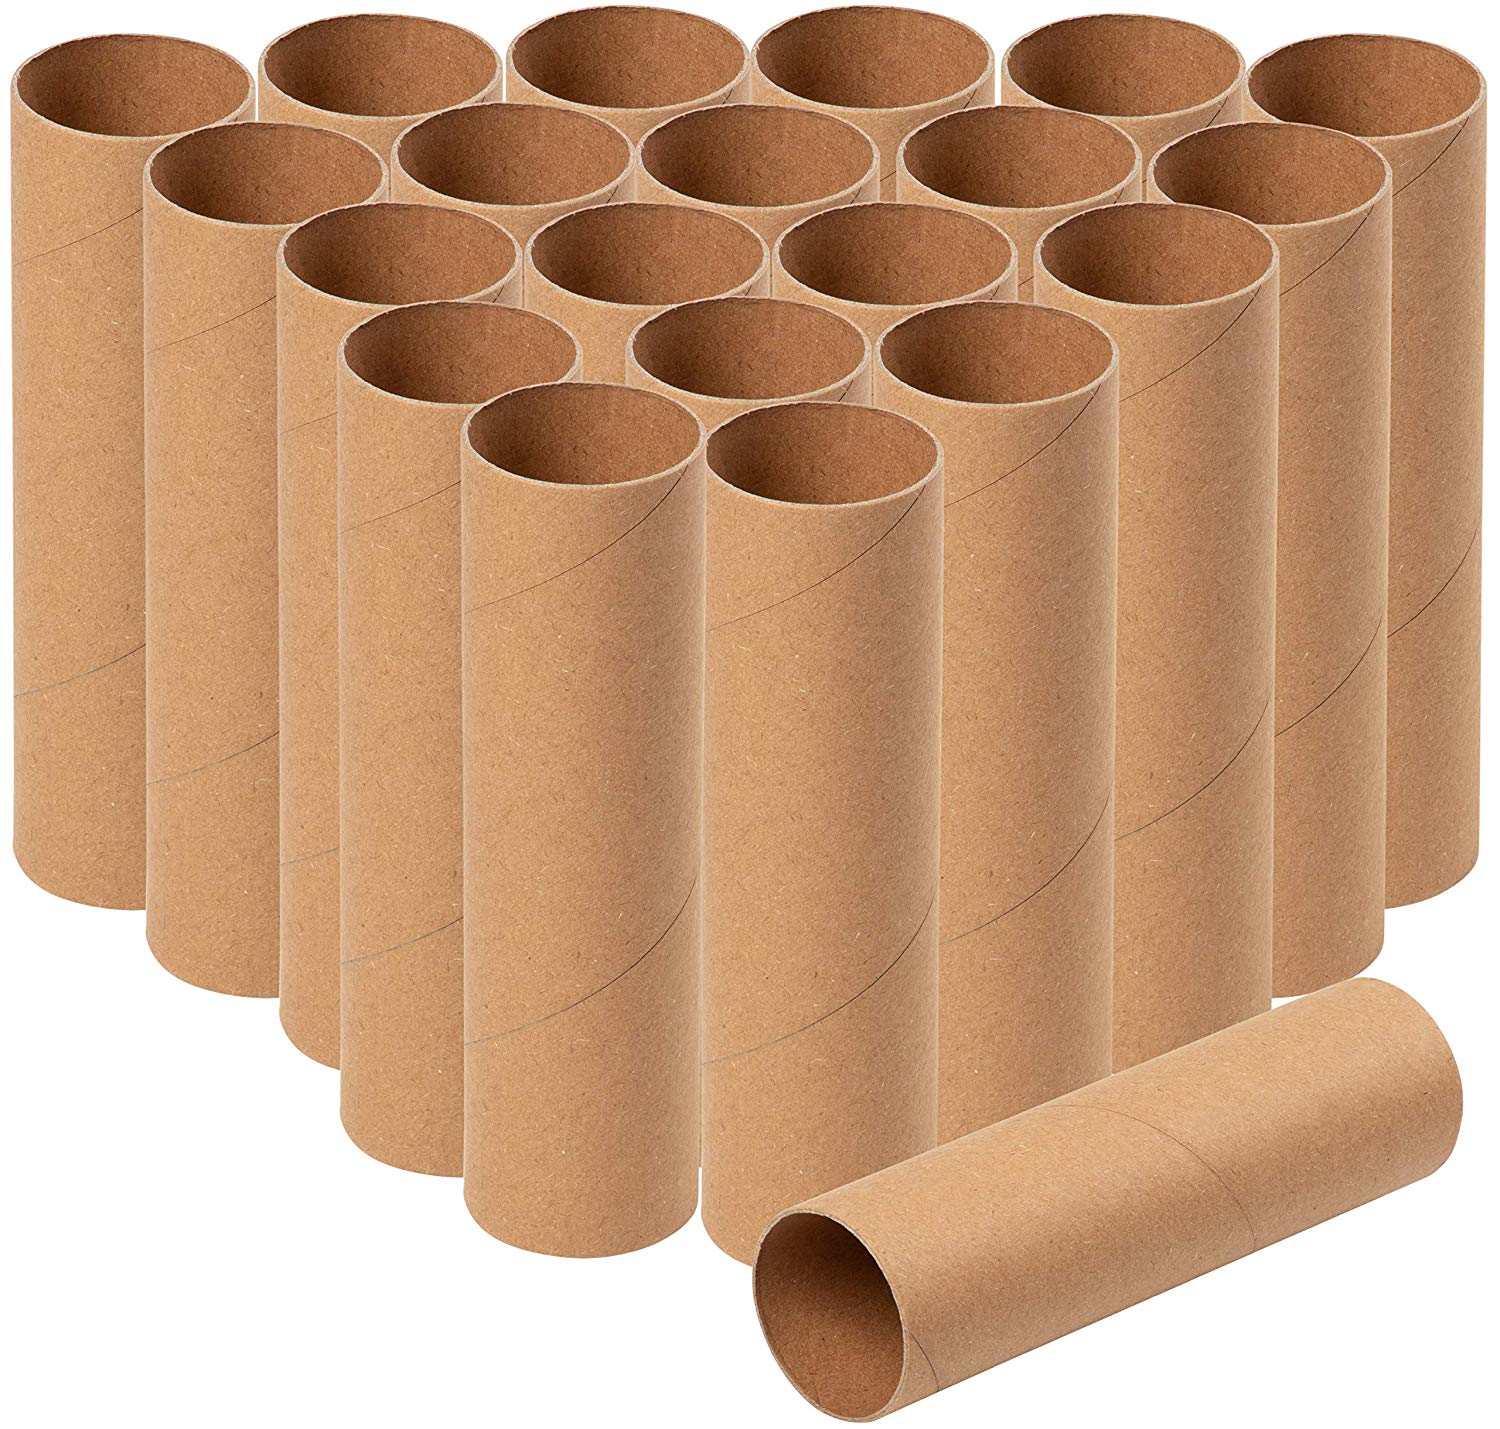 Cardboard tube boxes